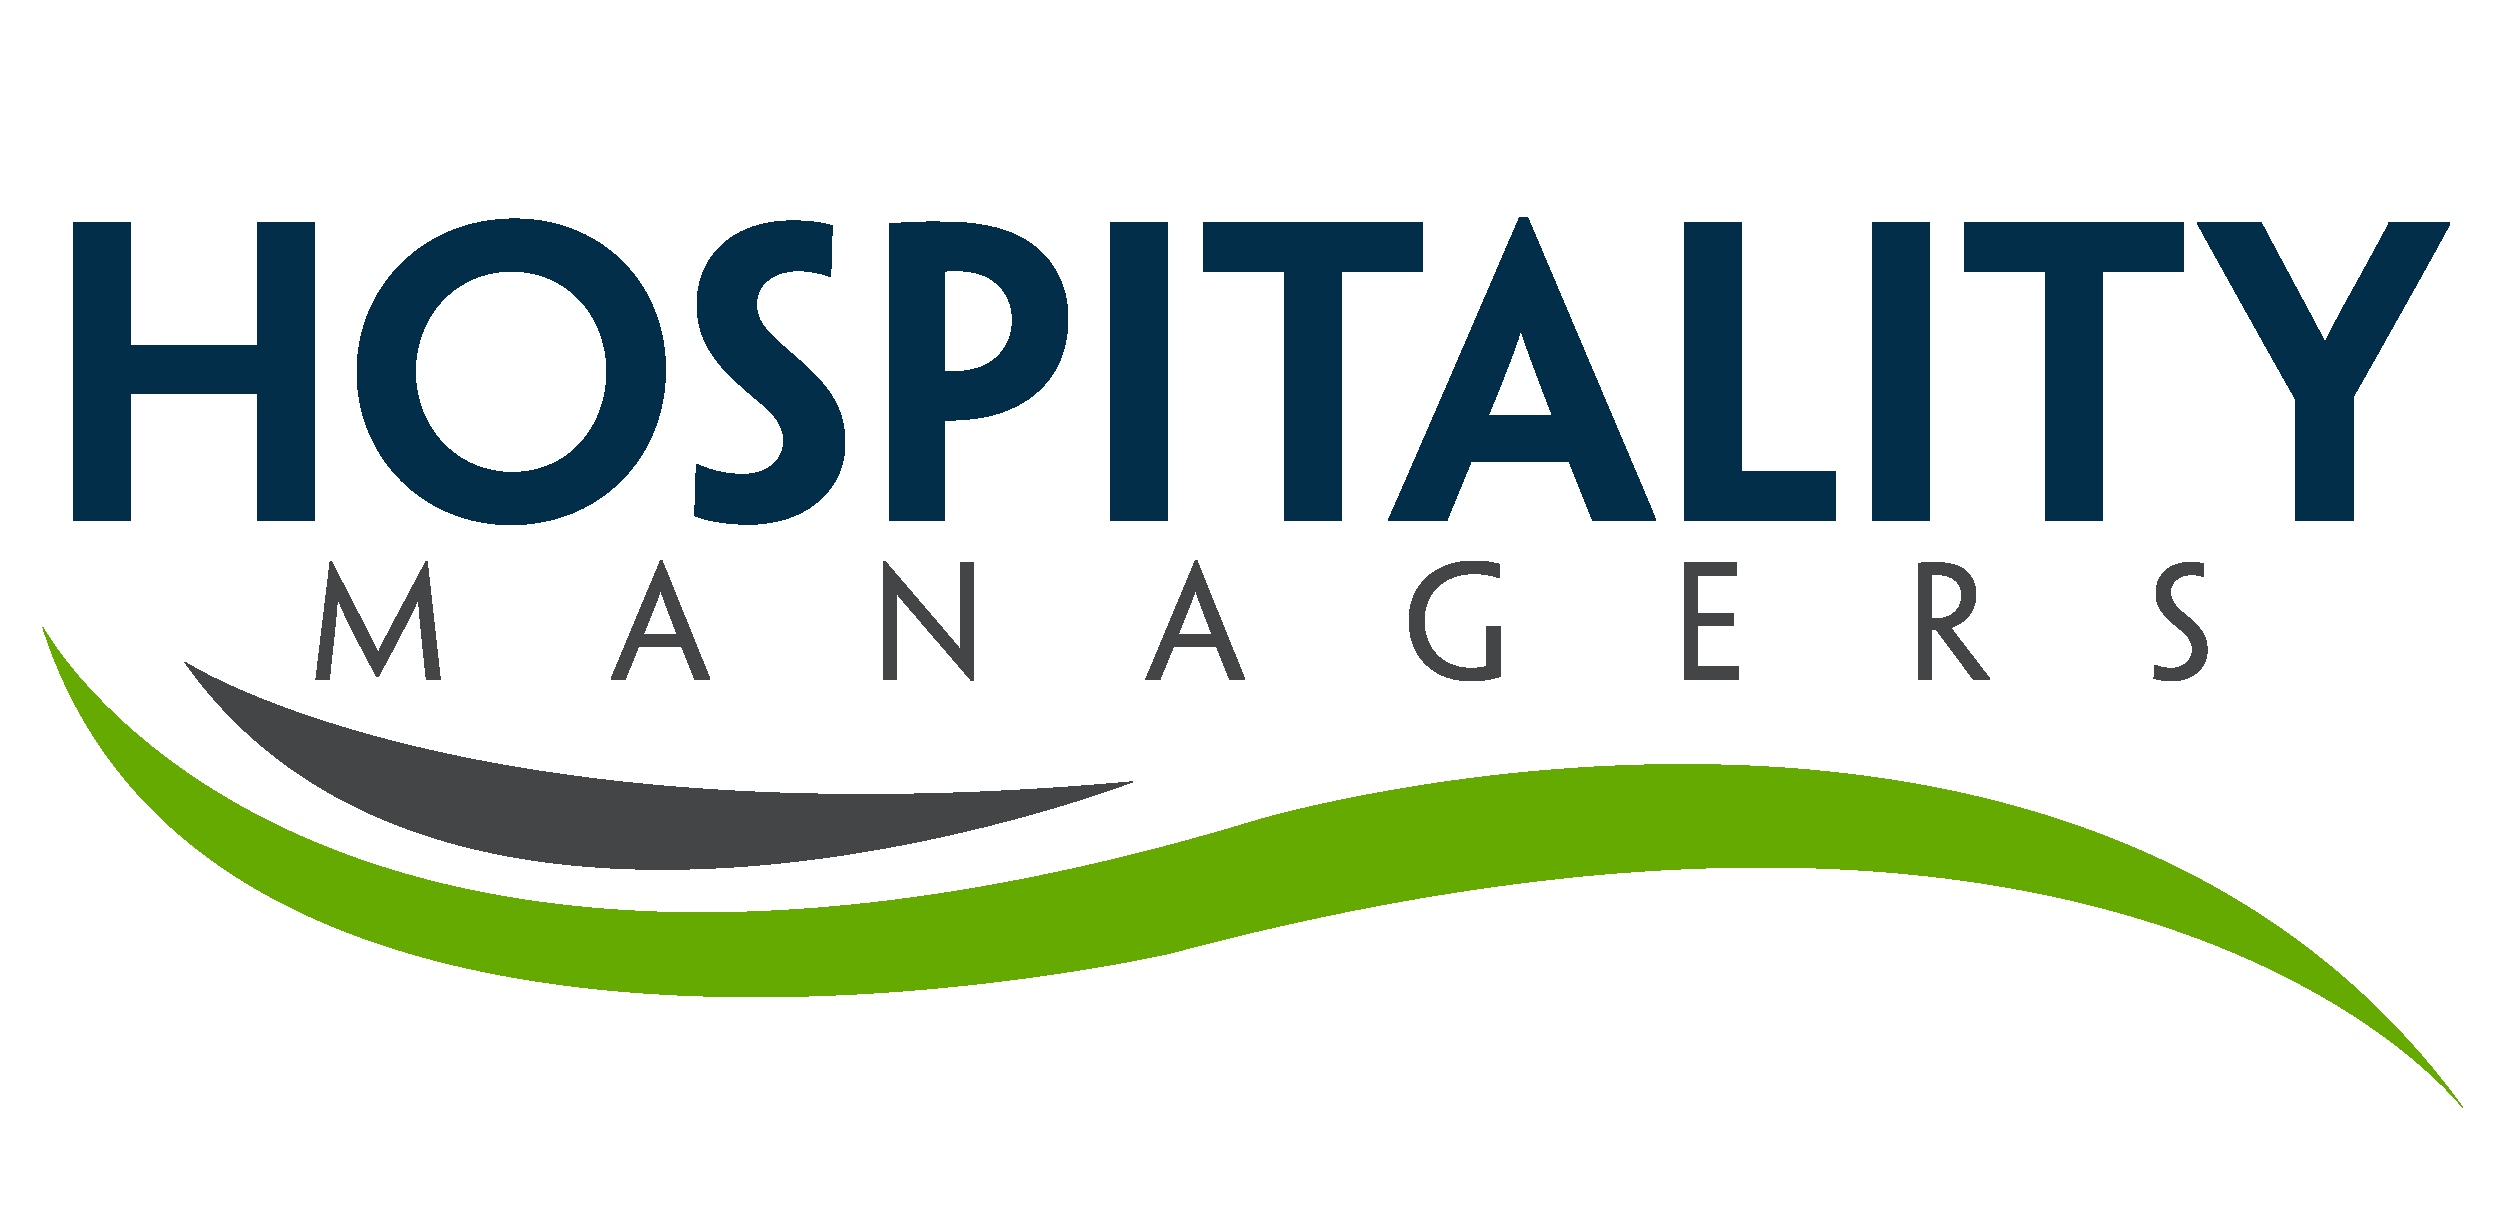 Relief motel management jobs australia